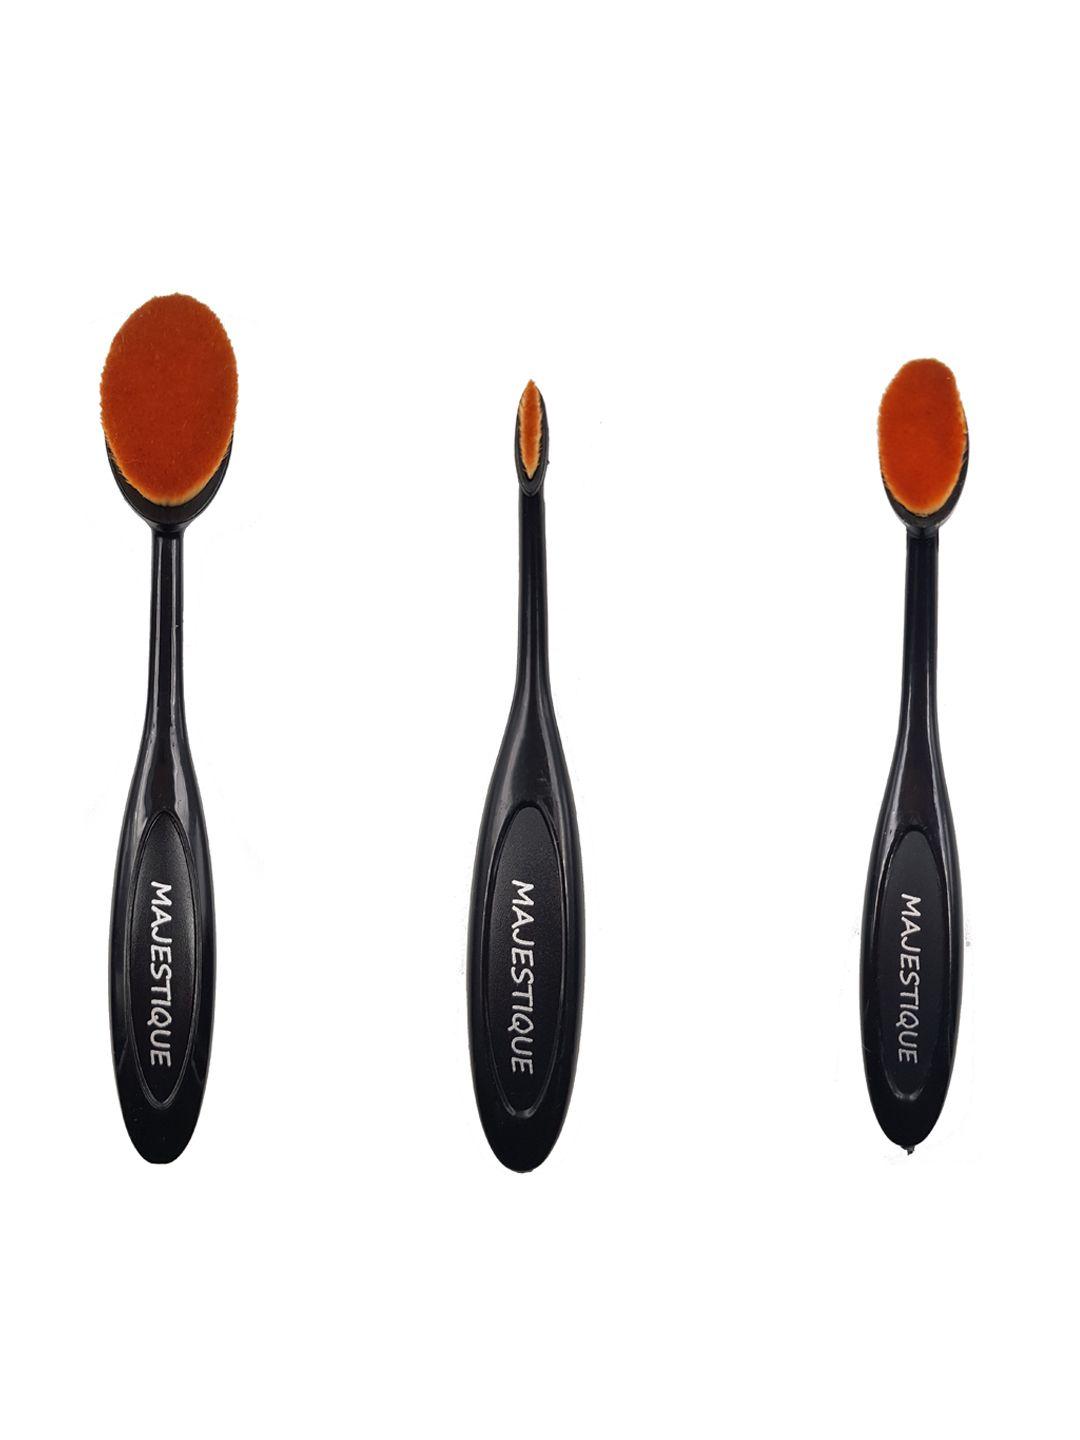 majestique set of 3 oval face makeup brushes